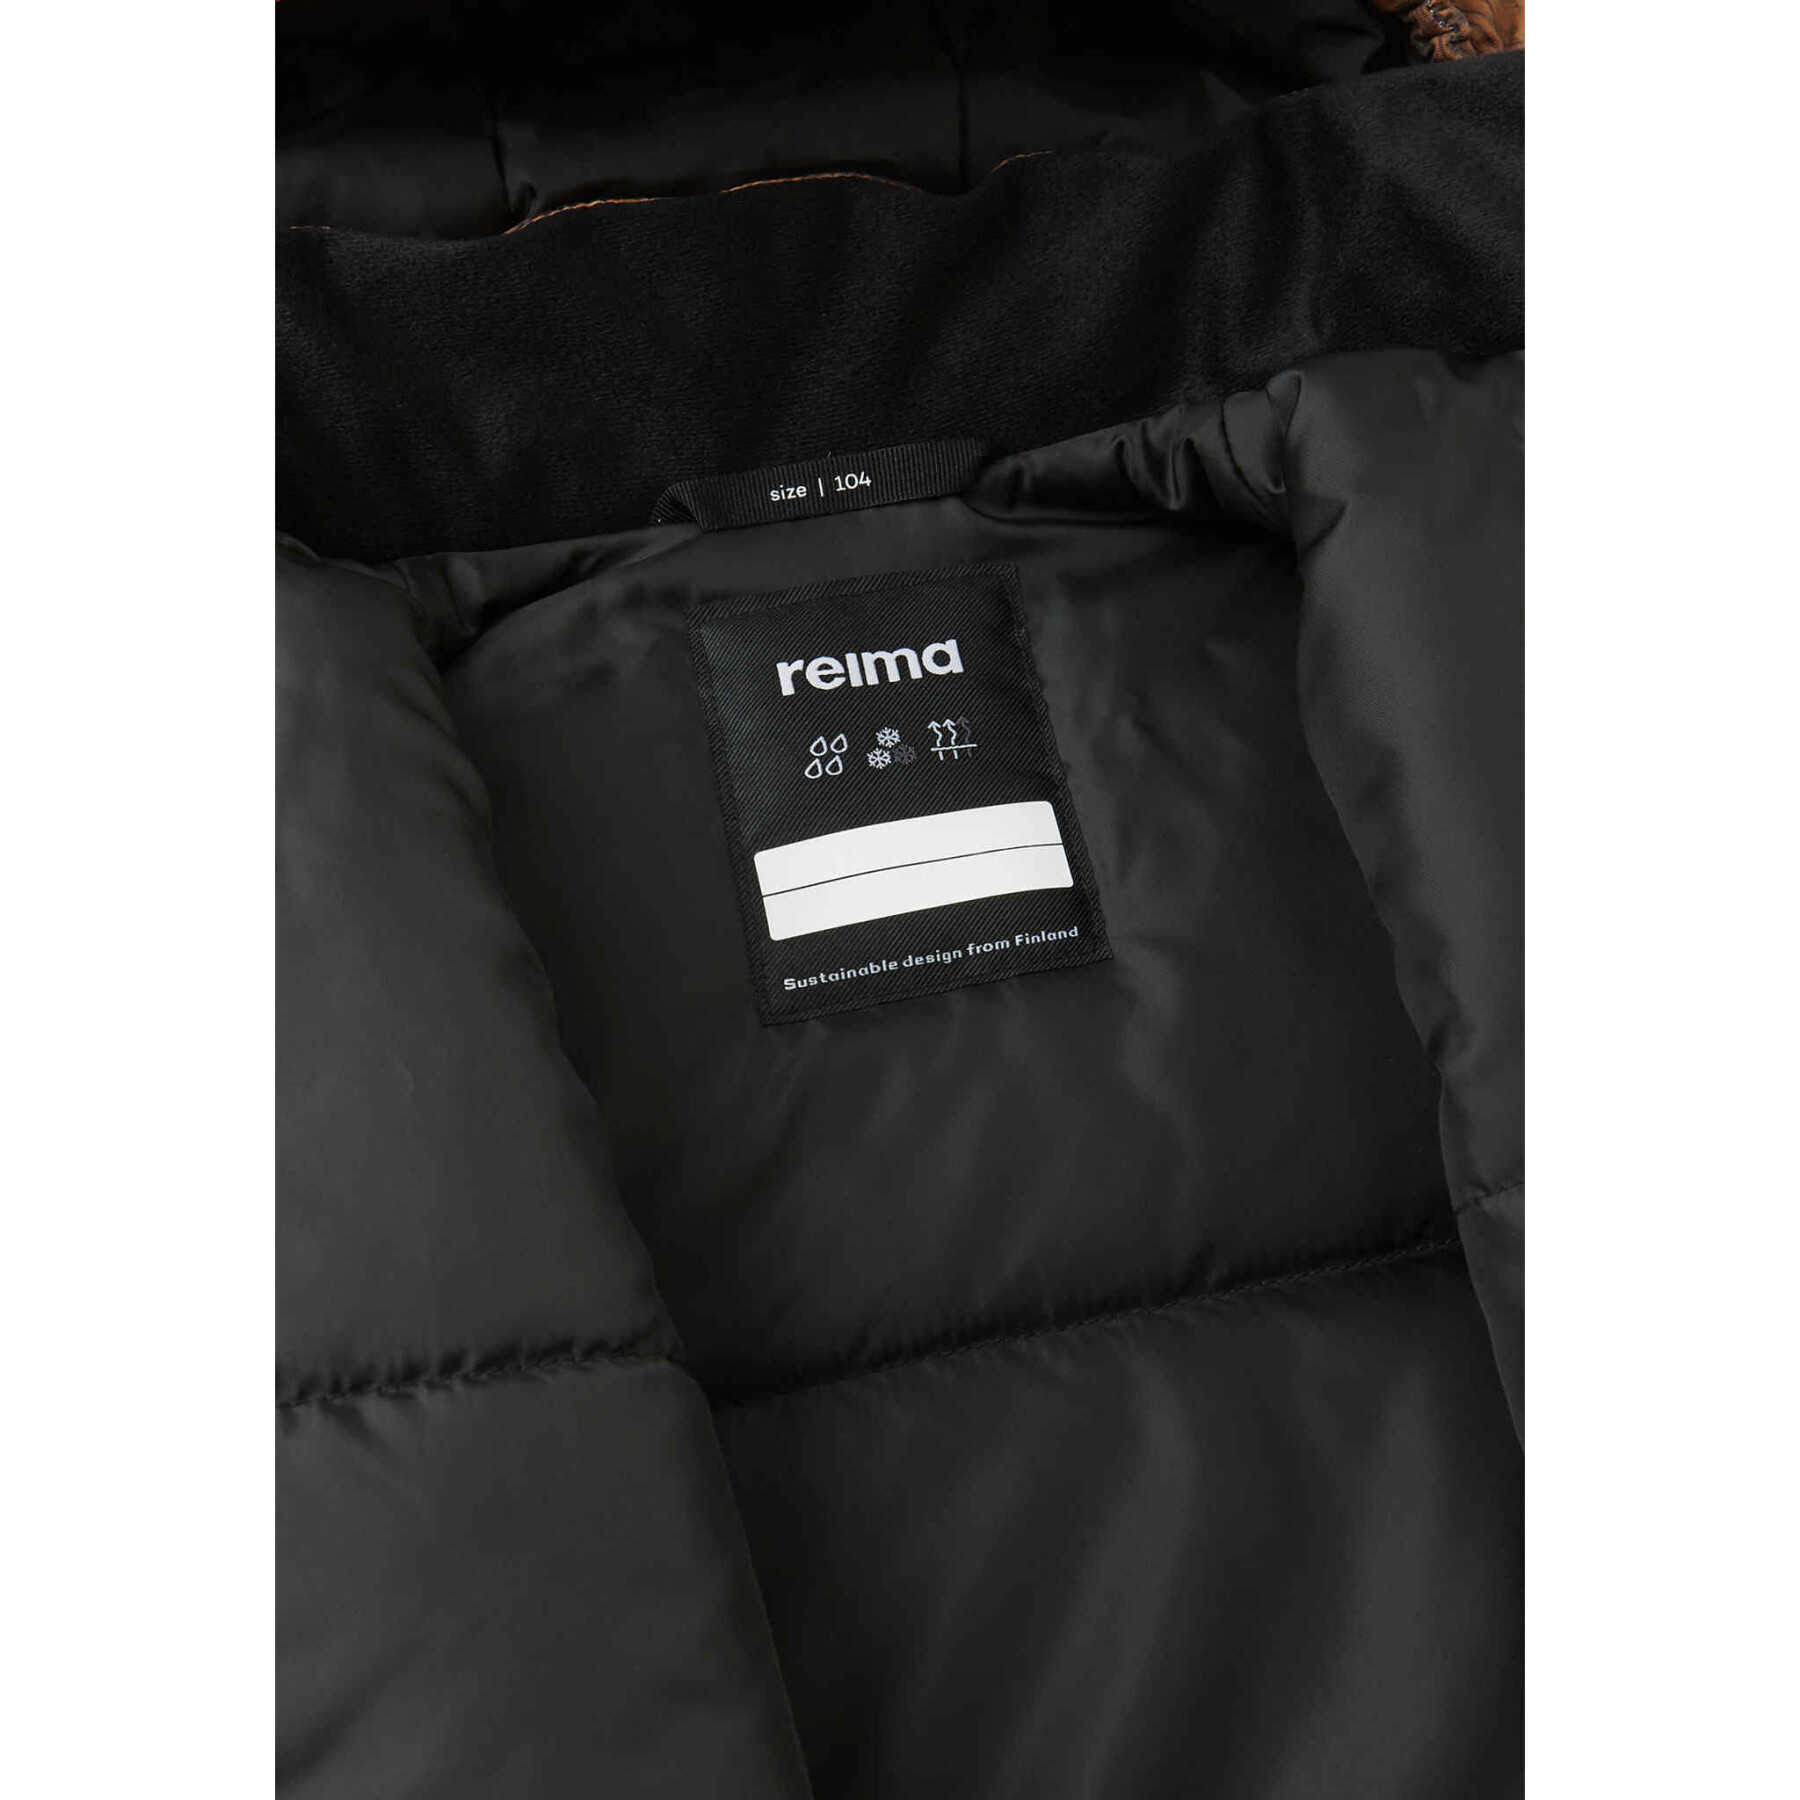 Children's winter jacket Reima Nuotio